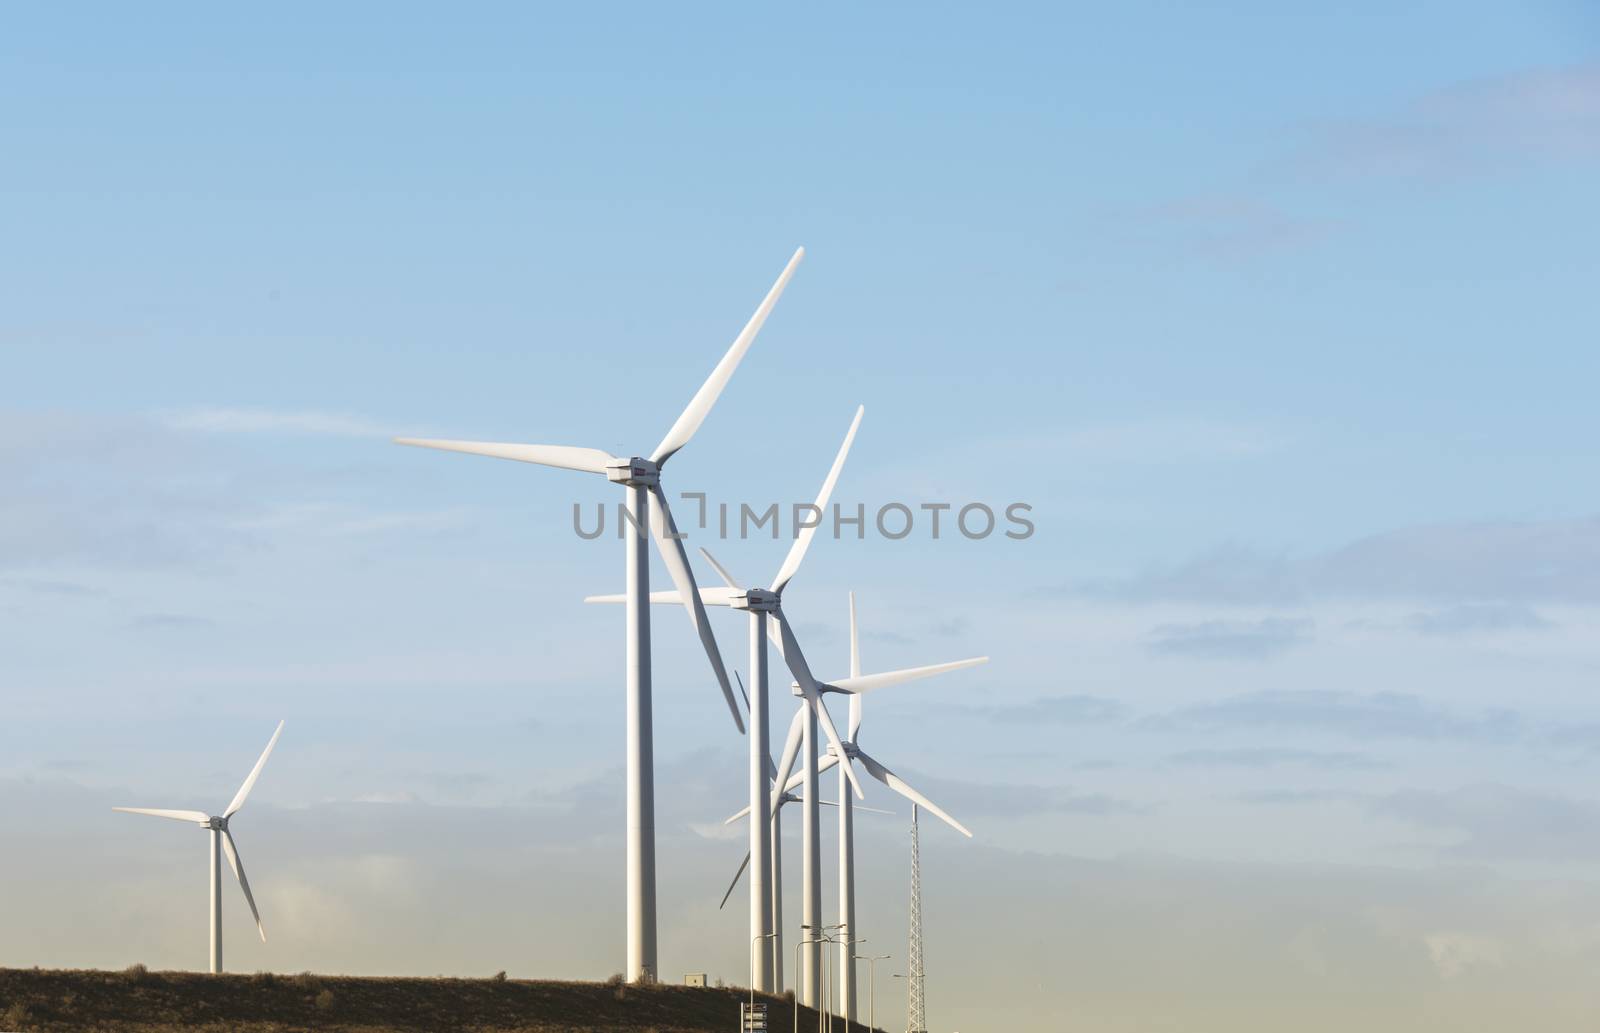 windmills in holland area europoort near rotterdam